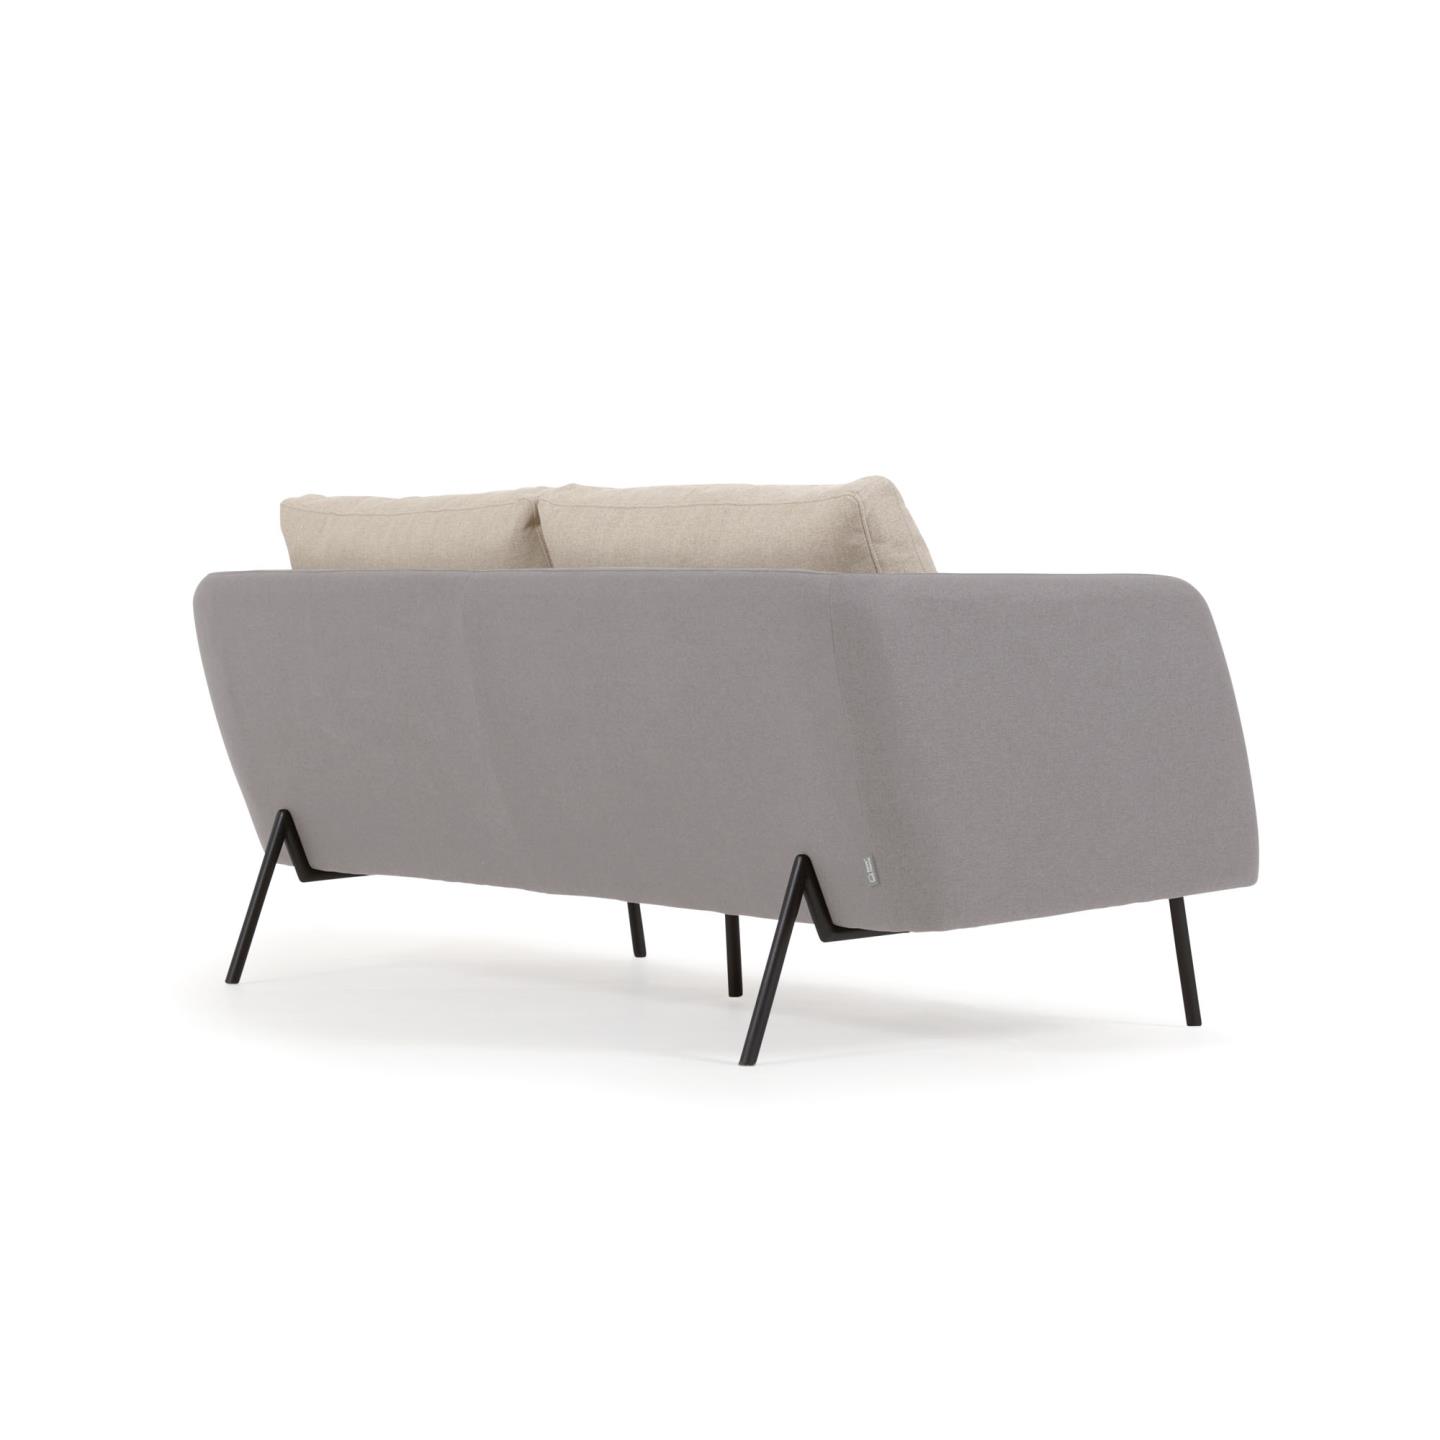 Three-seater grey Walkyria sofa beige cushions and metal legs with black finish 195 cm